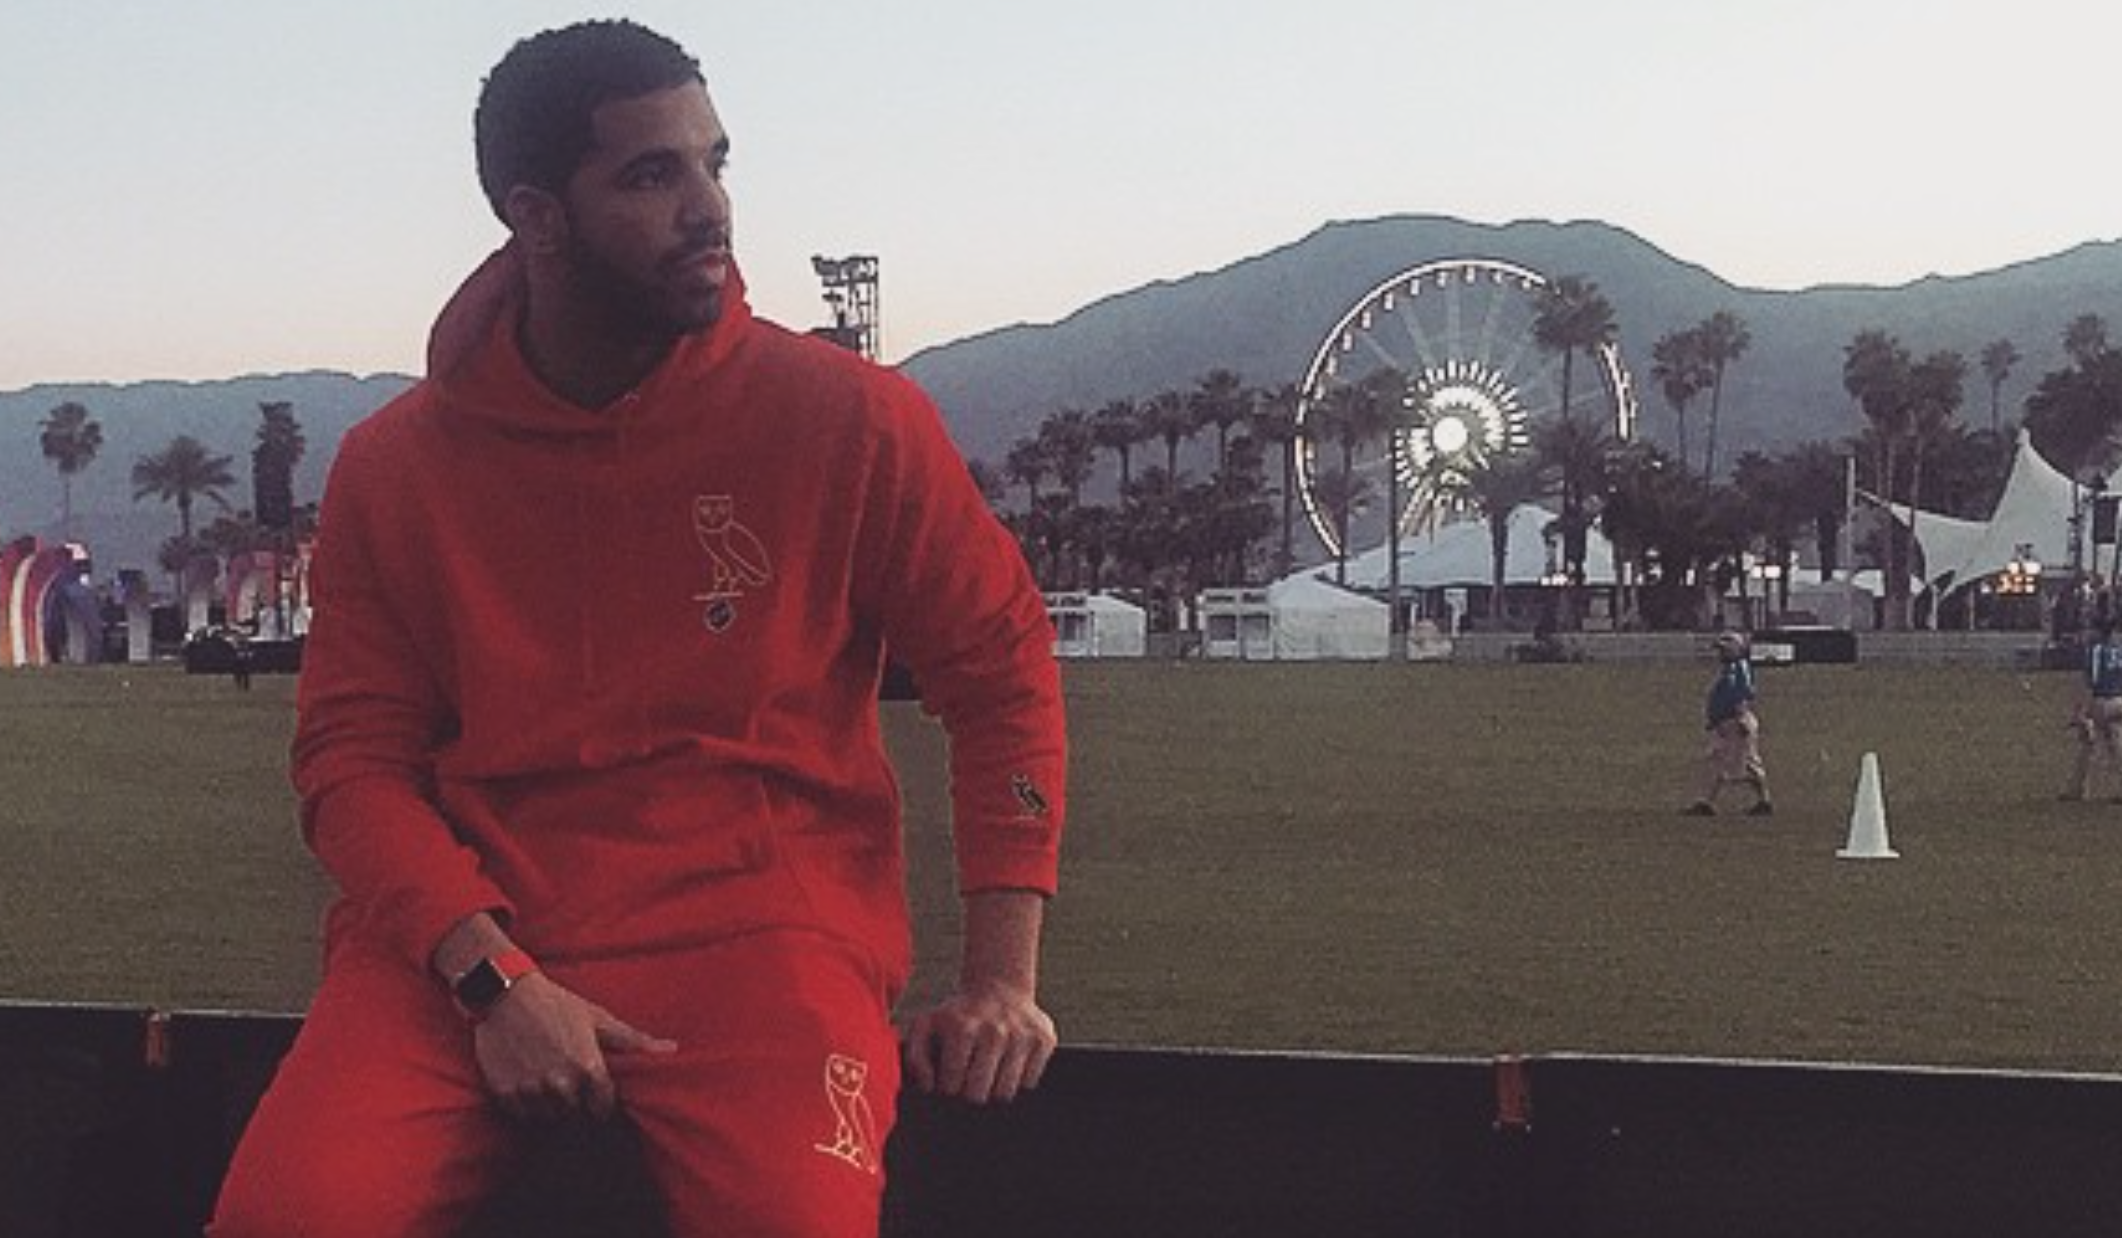 Drake wearing the $17K Apple Watch at Coachella